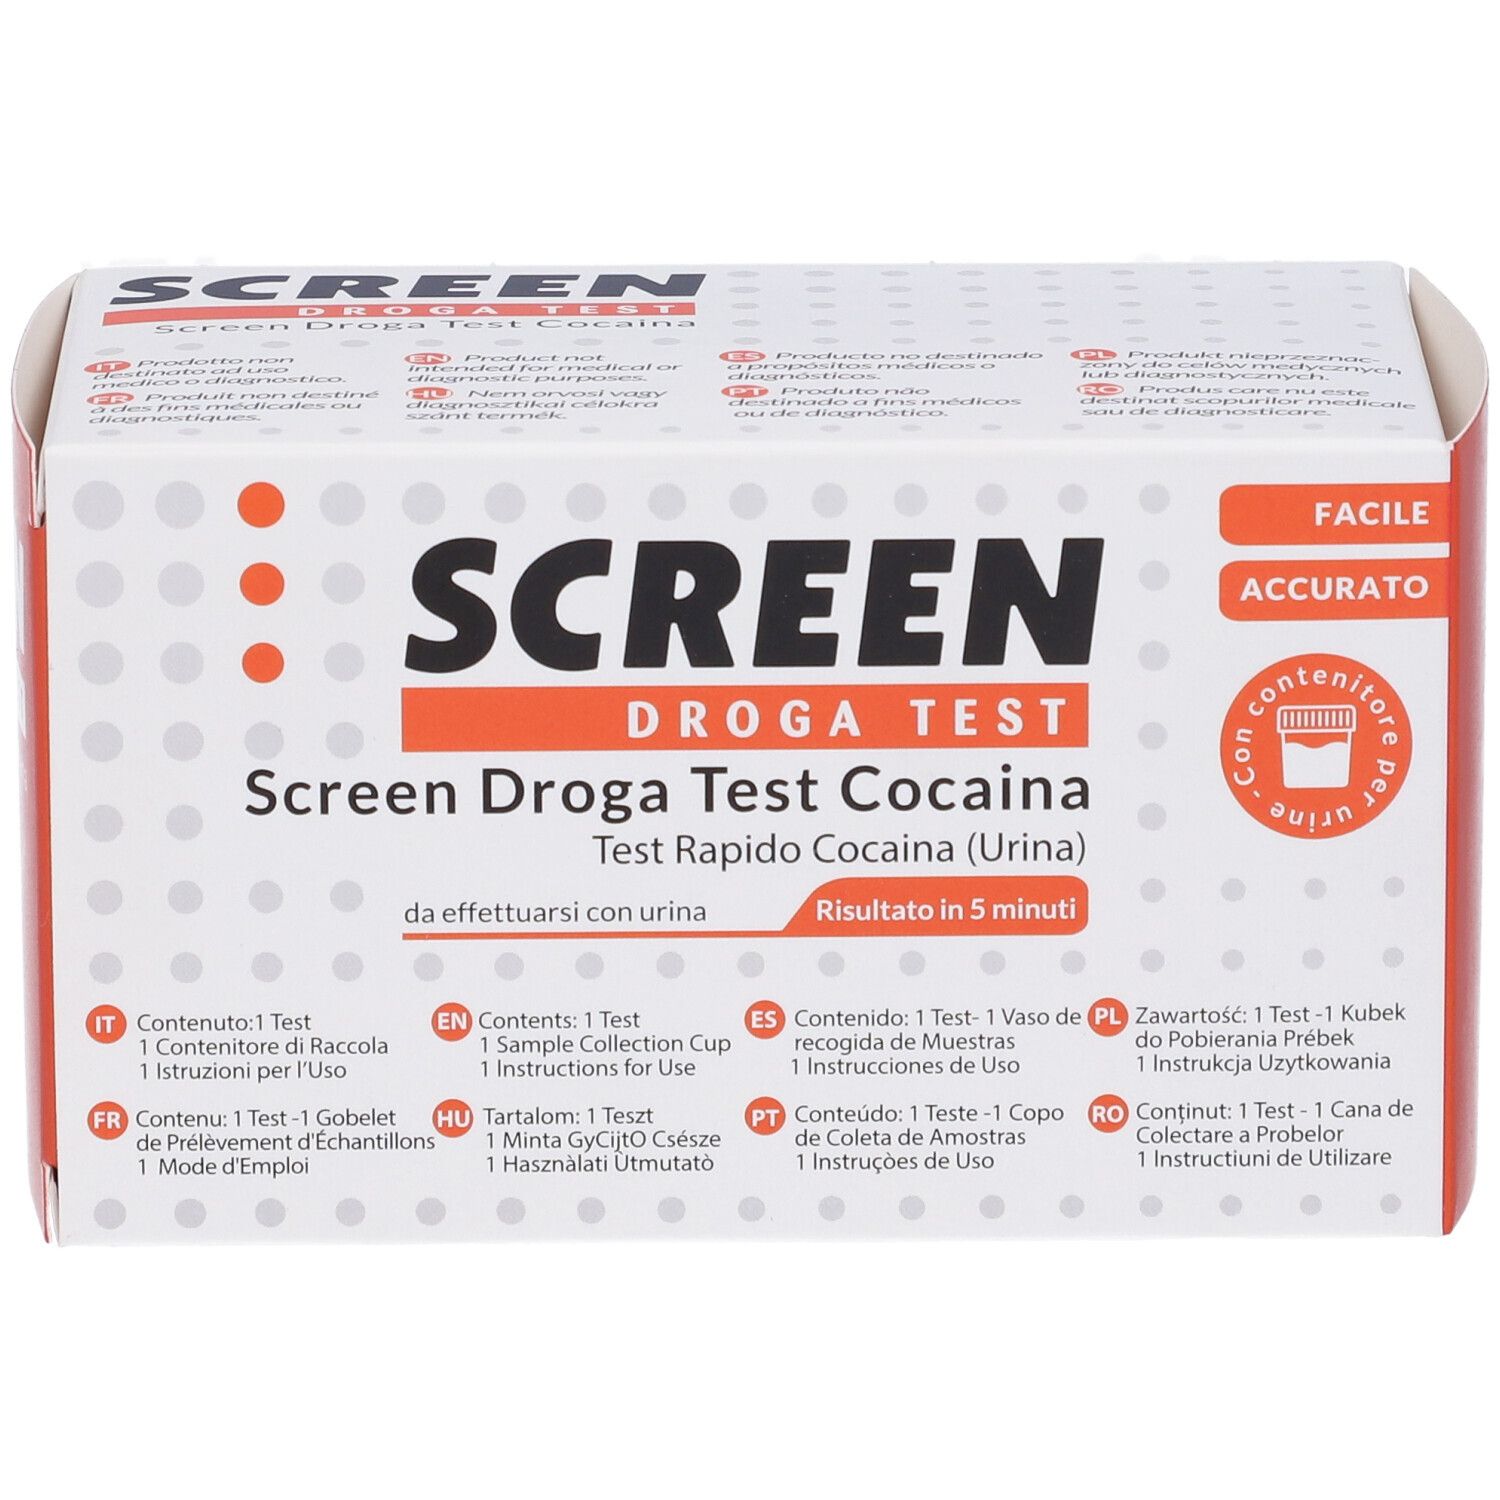 SCREEN® Droga Test Cocaina